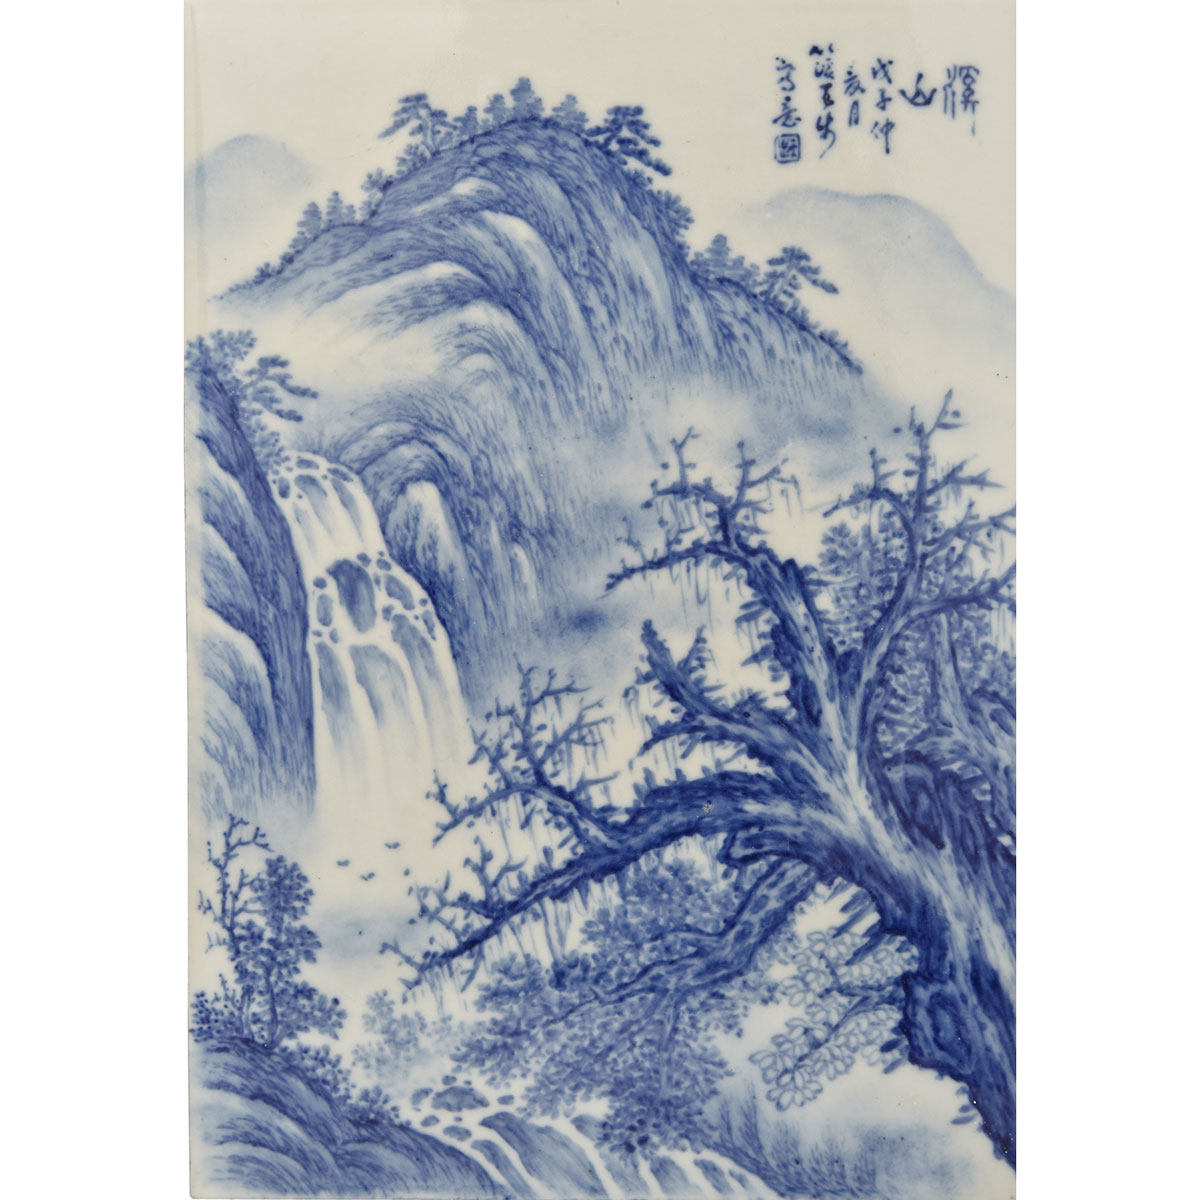 Attributed to Wang Bu (1896-1968)